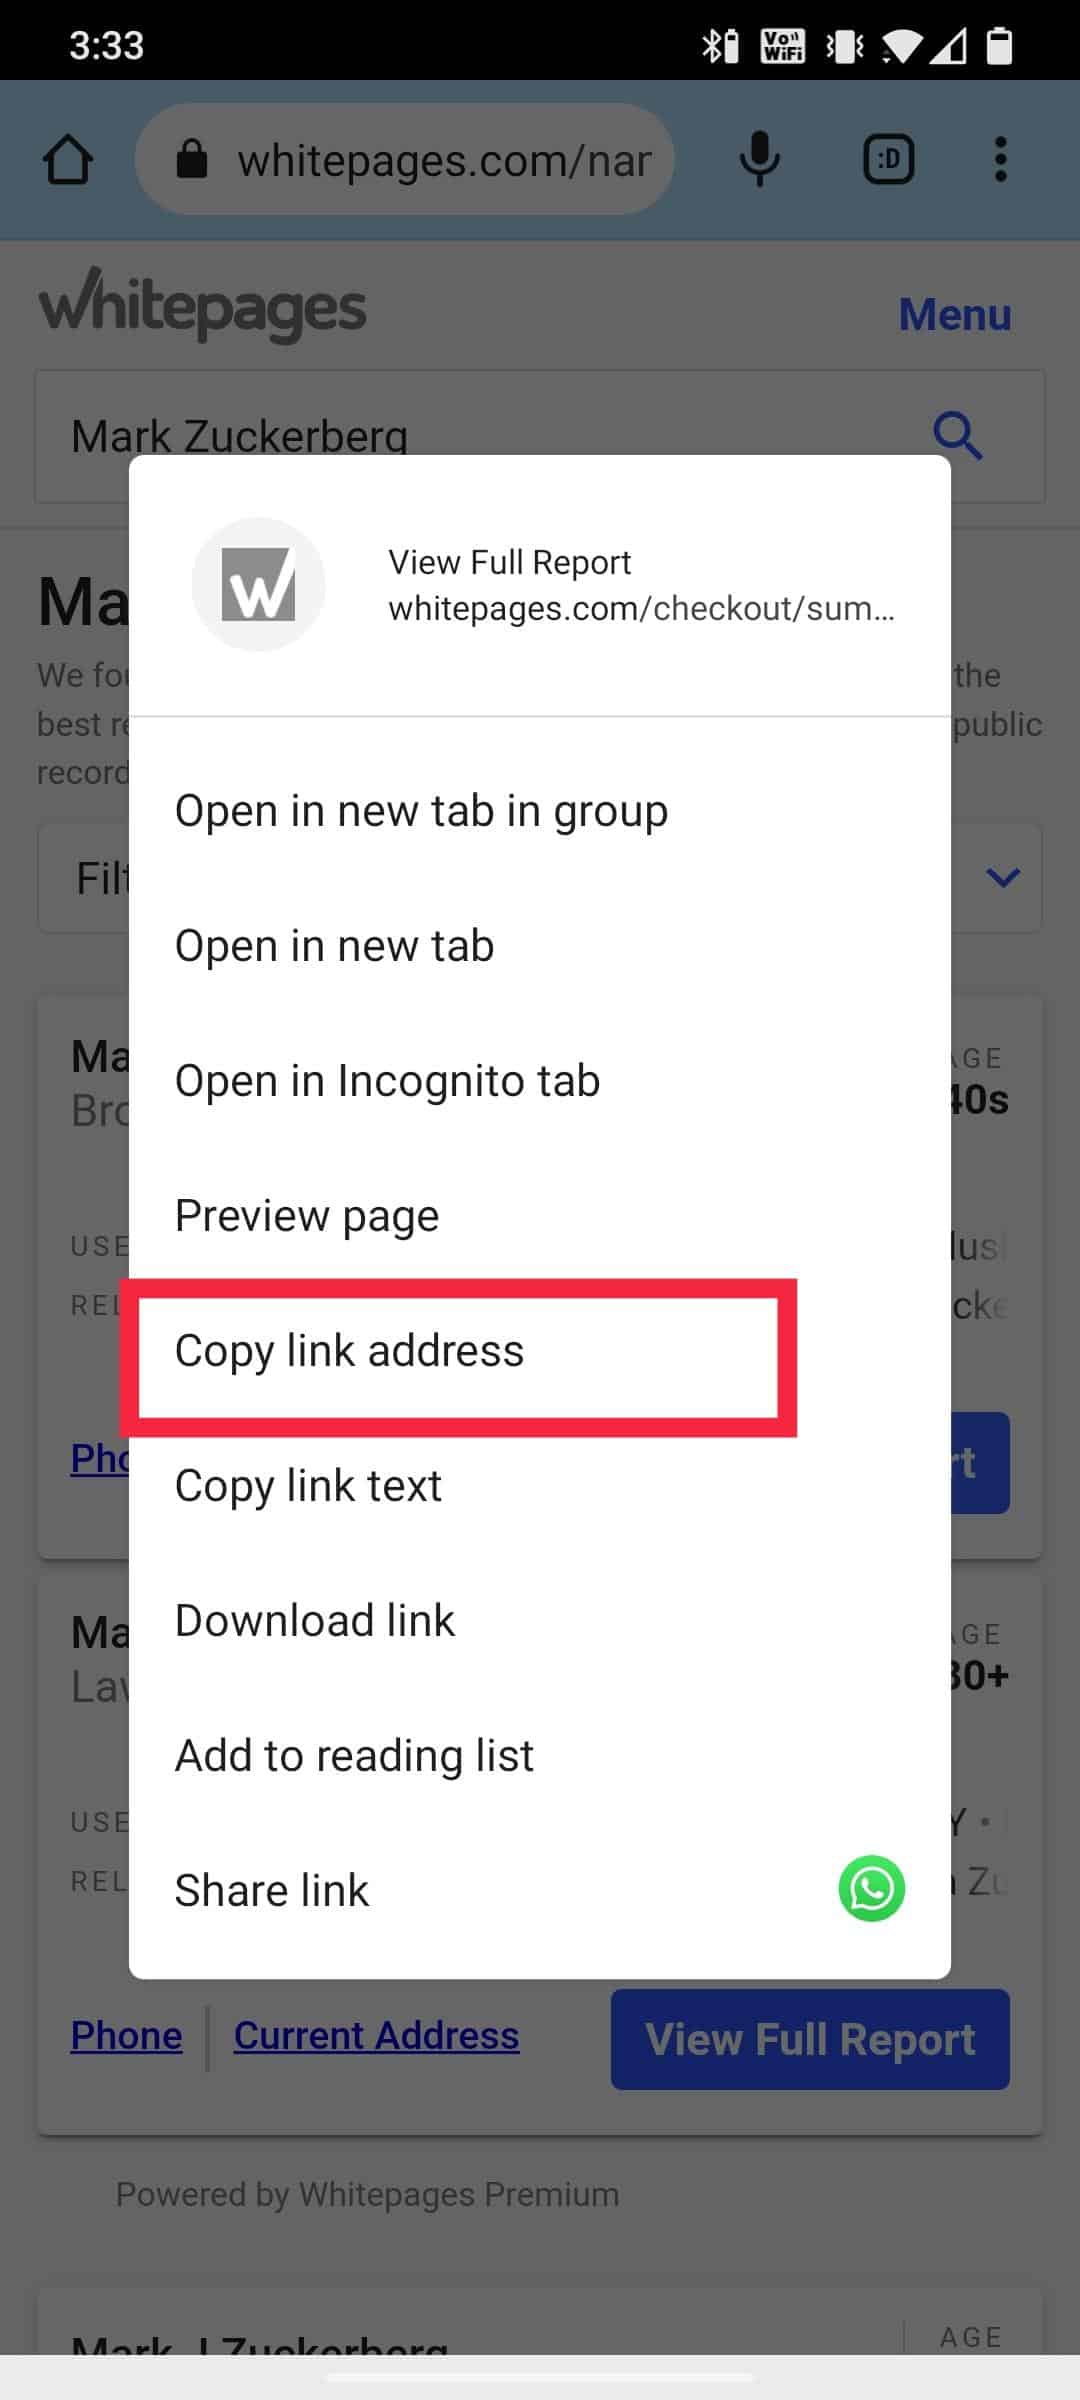 Choose Copy link address